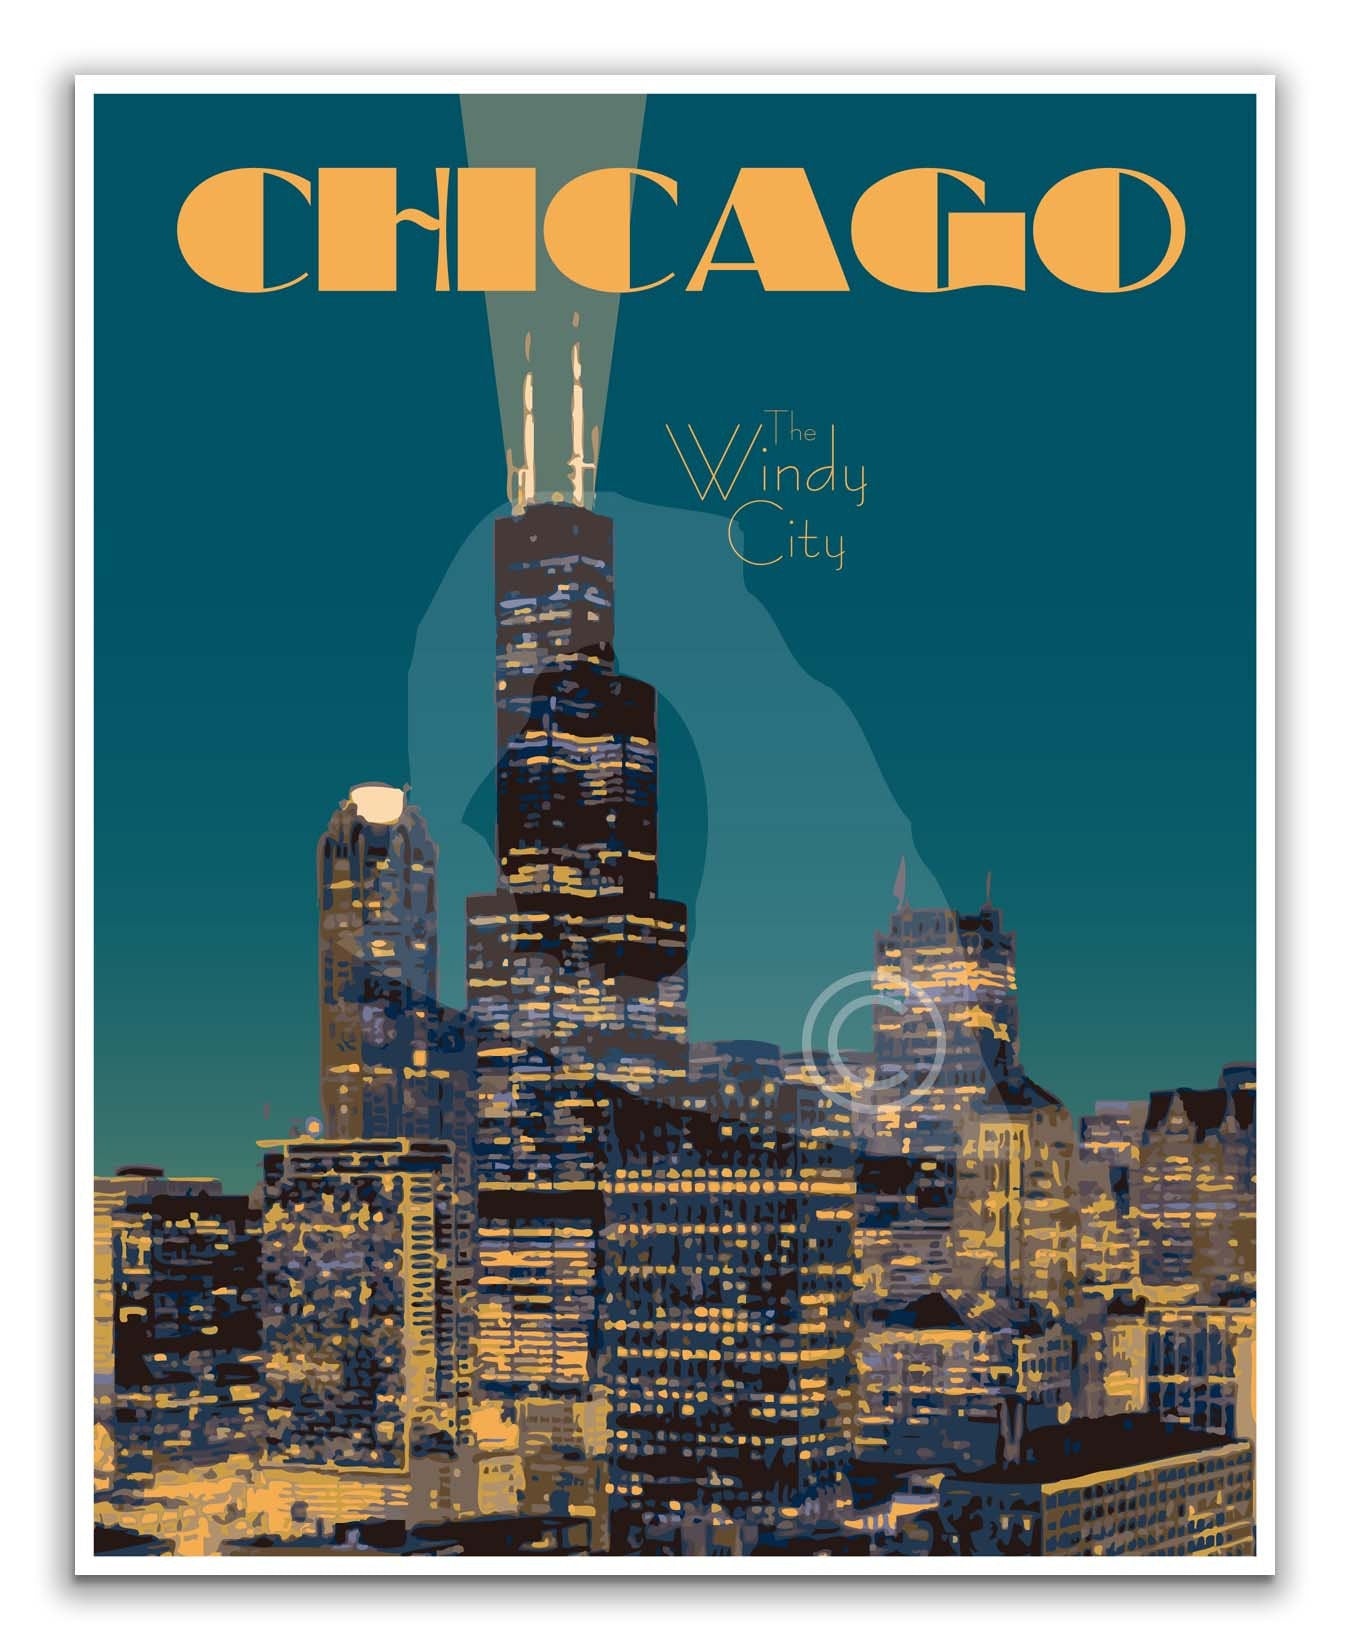 Chicago Illinois Travel Print, Chicago Cityscape Poster, Chicago Vintage Style Travel Art